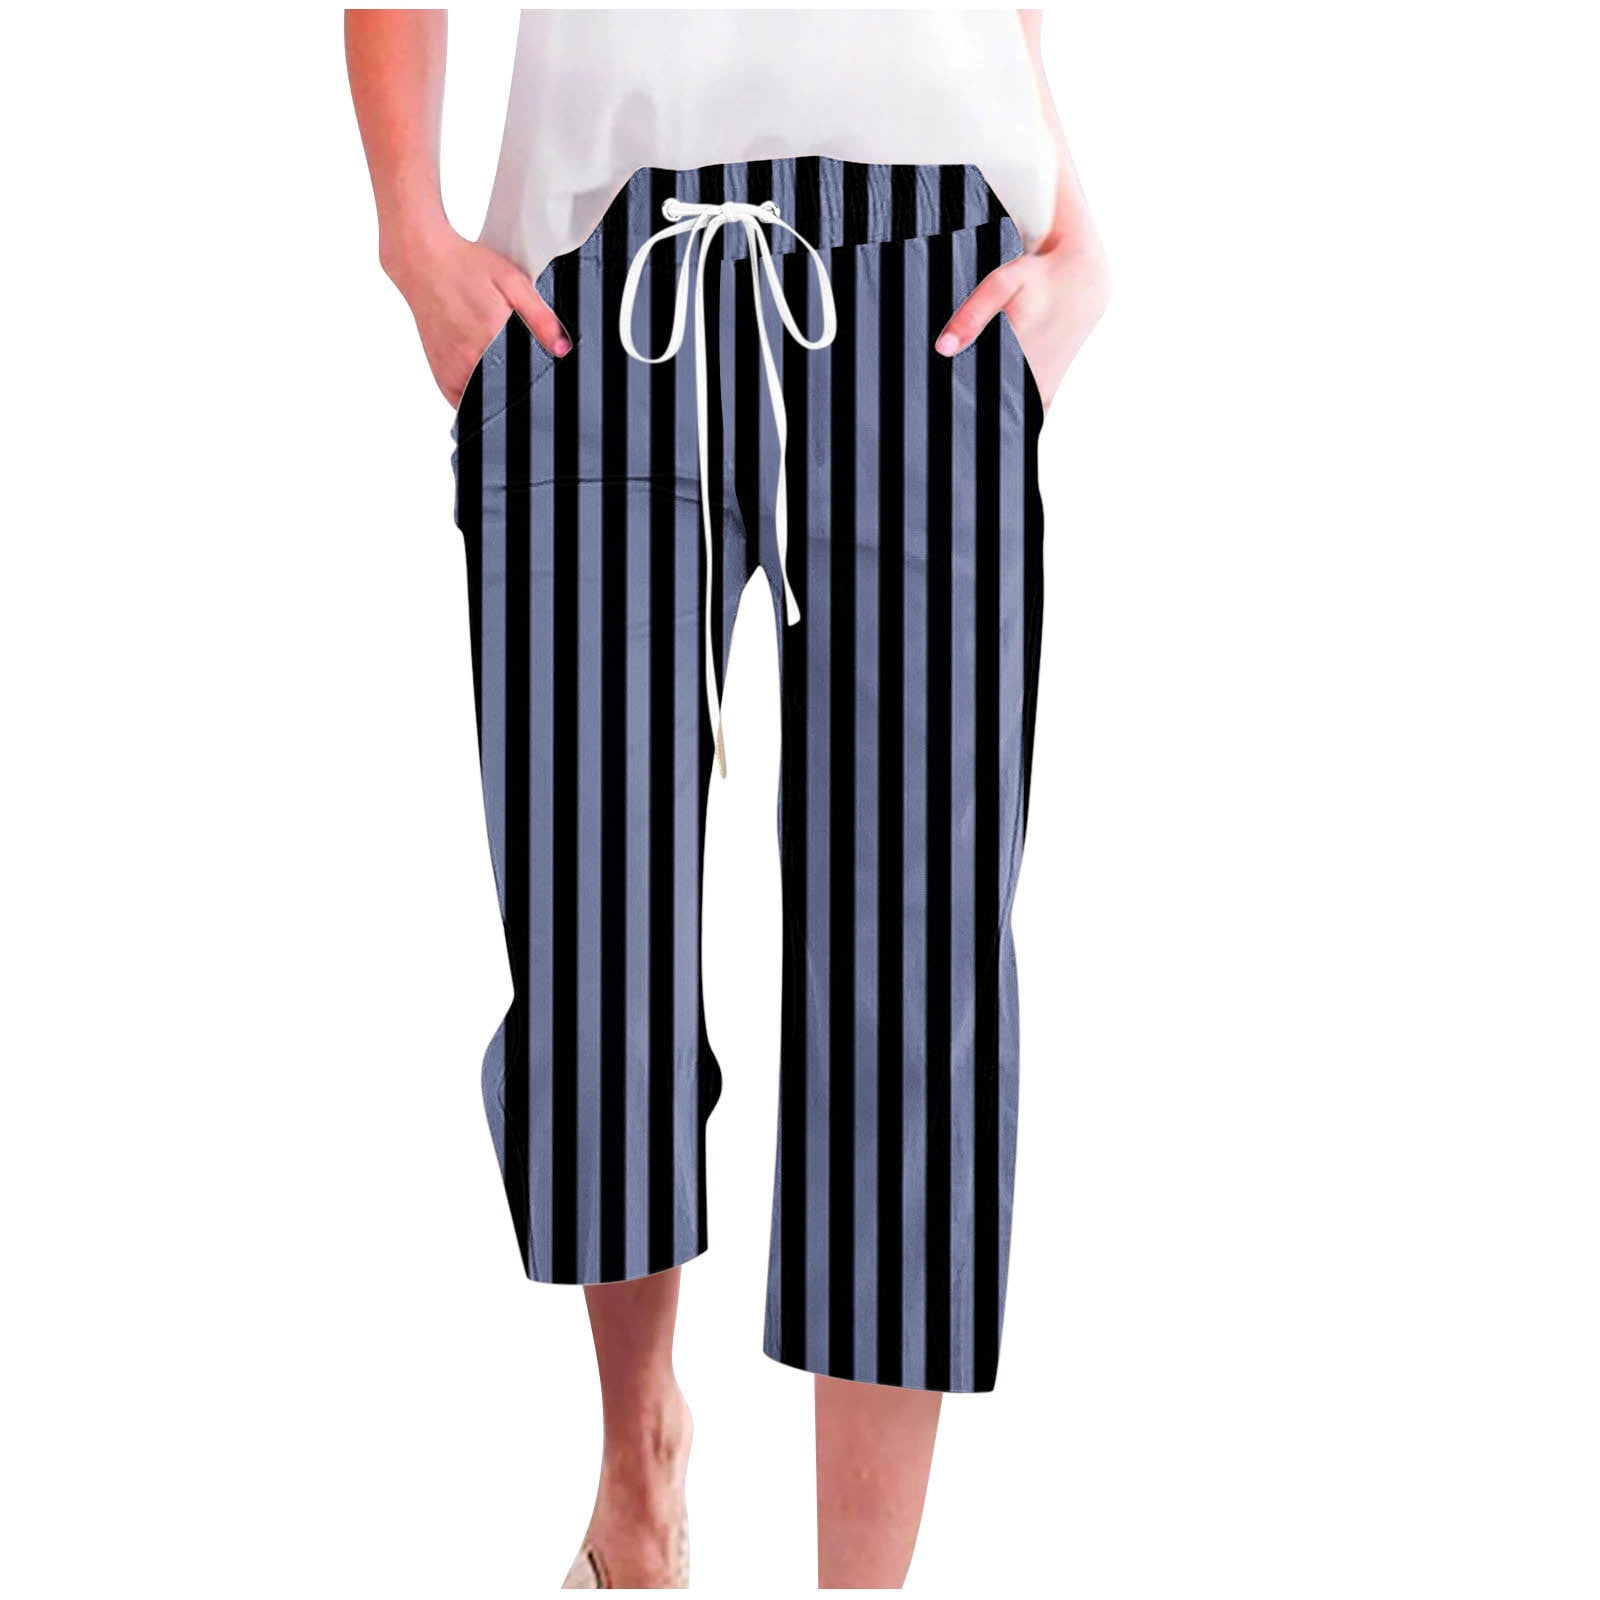 Onegirl Long Cargo Pants for Women Tall Jeans for Women Petite Short ...